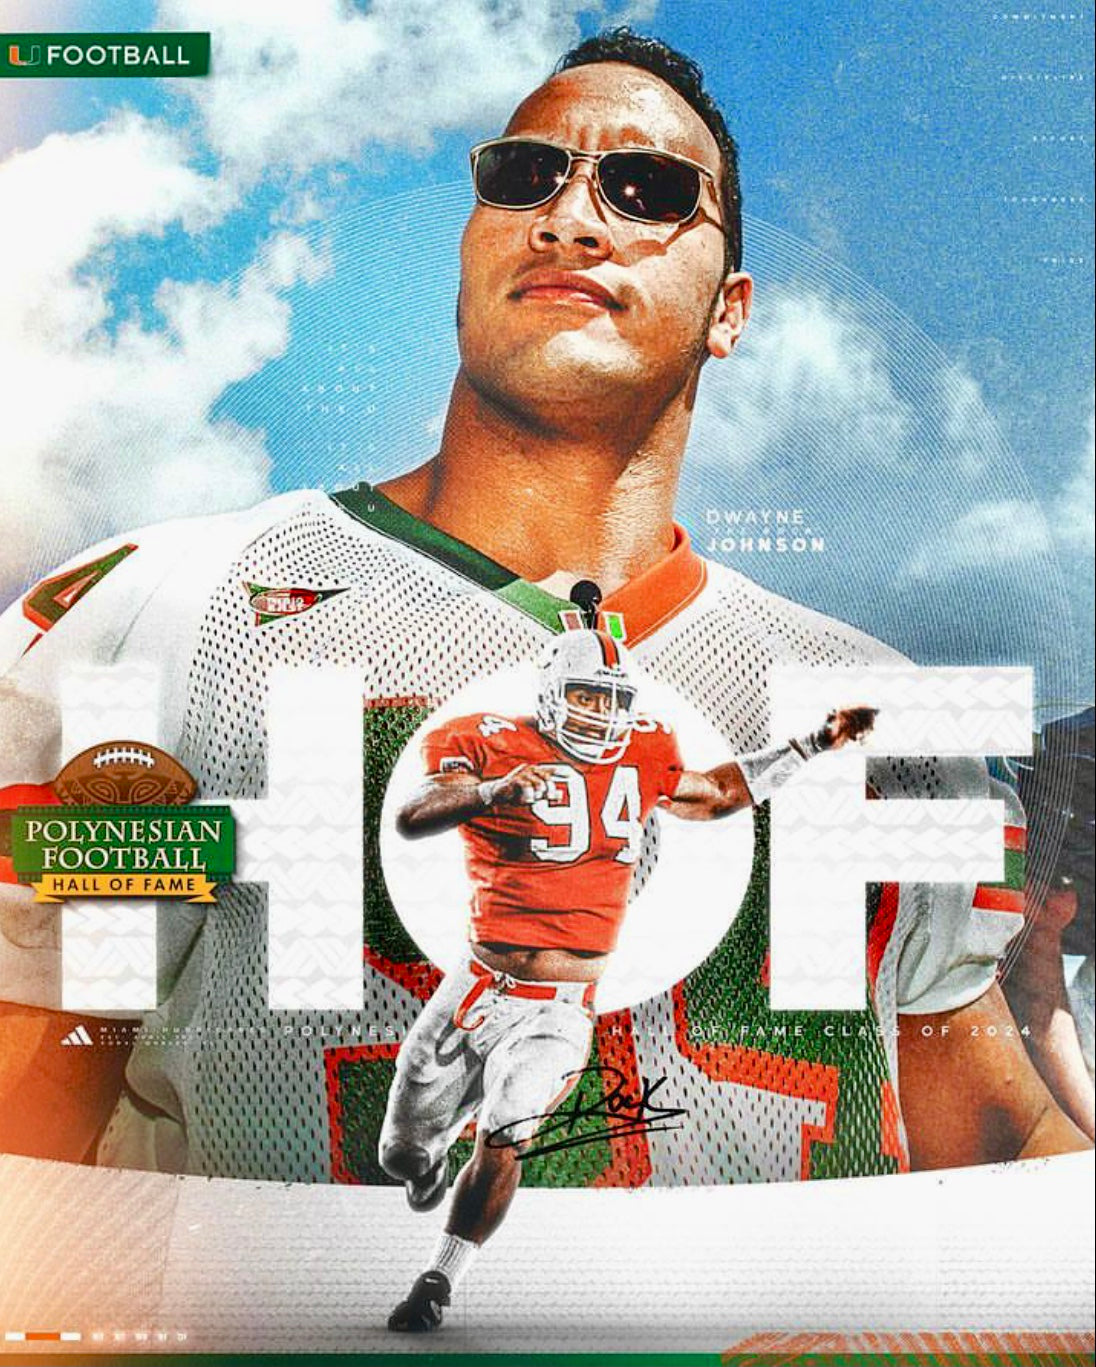 Dwayne ‘The Rock’ Johnson 1994 Miami Hurricanes NCAA Campus Legends College Football Jersey- Orange